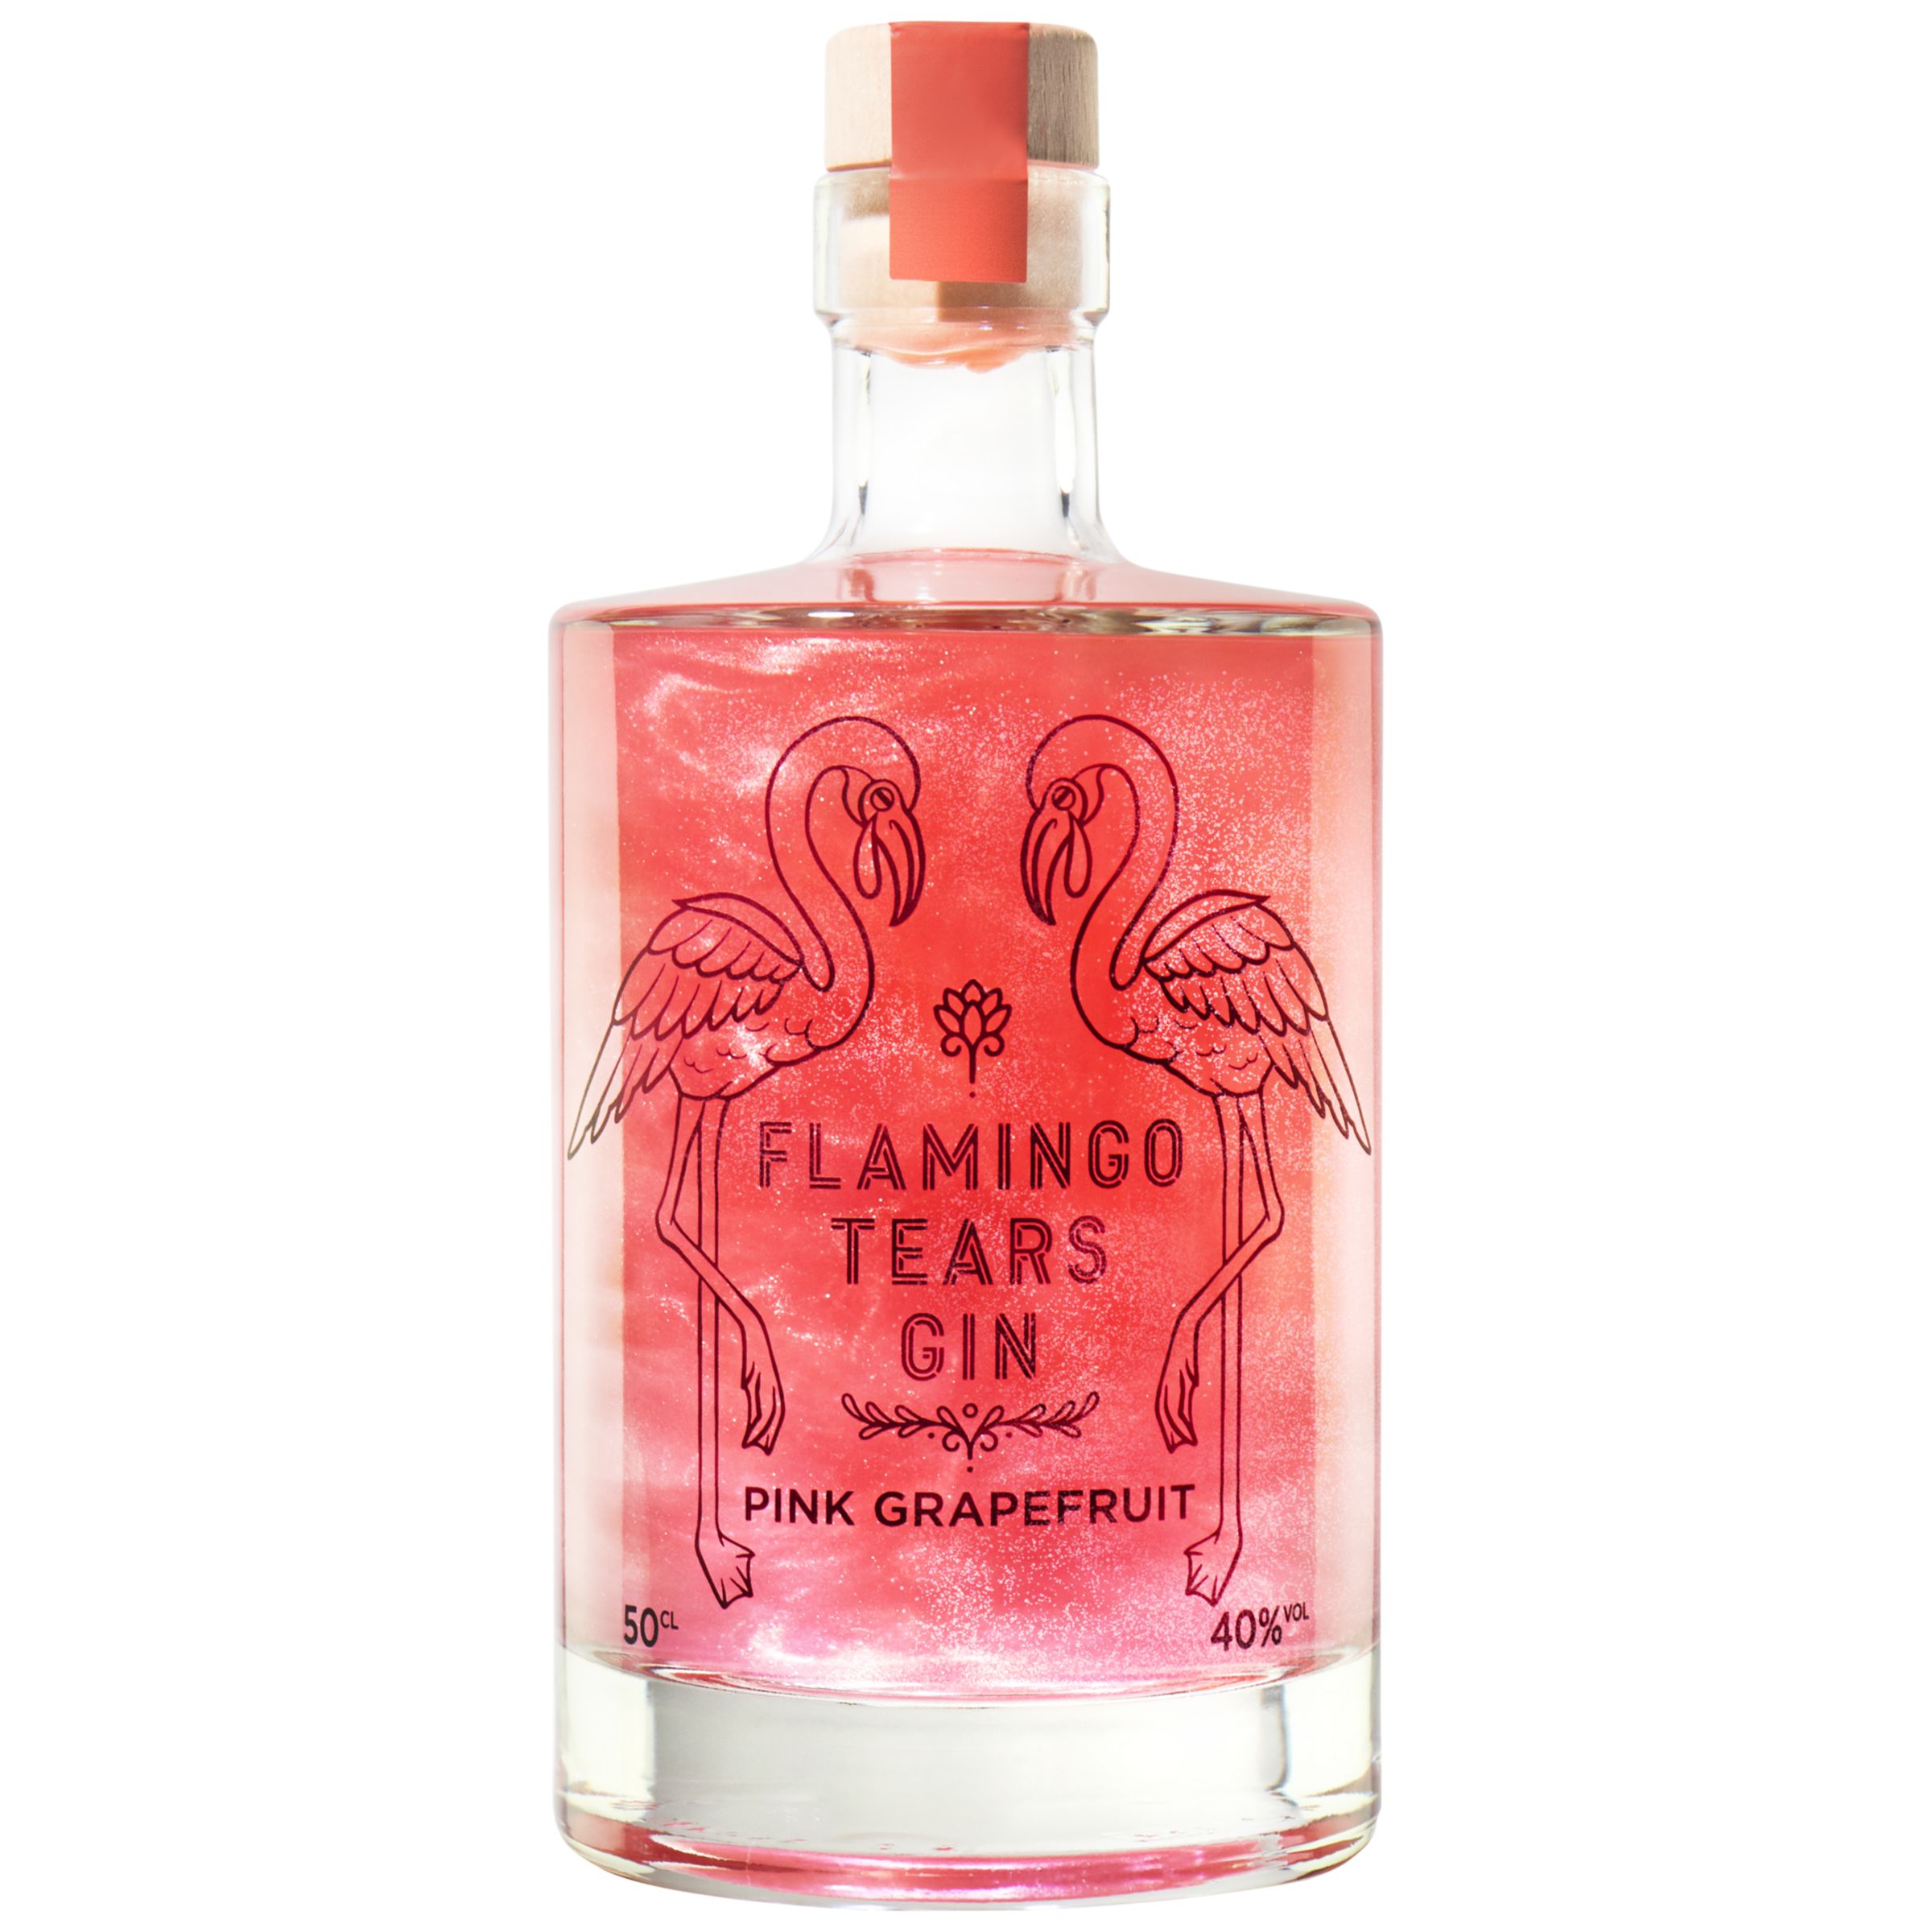 Pink Grapefruit Tears Flamingo Gin, 50cl Firebox